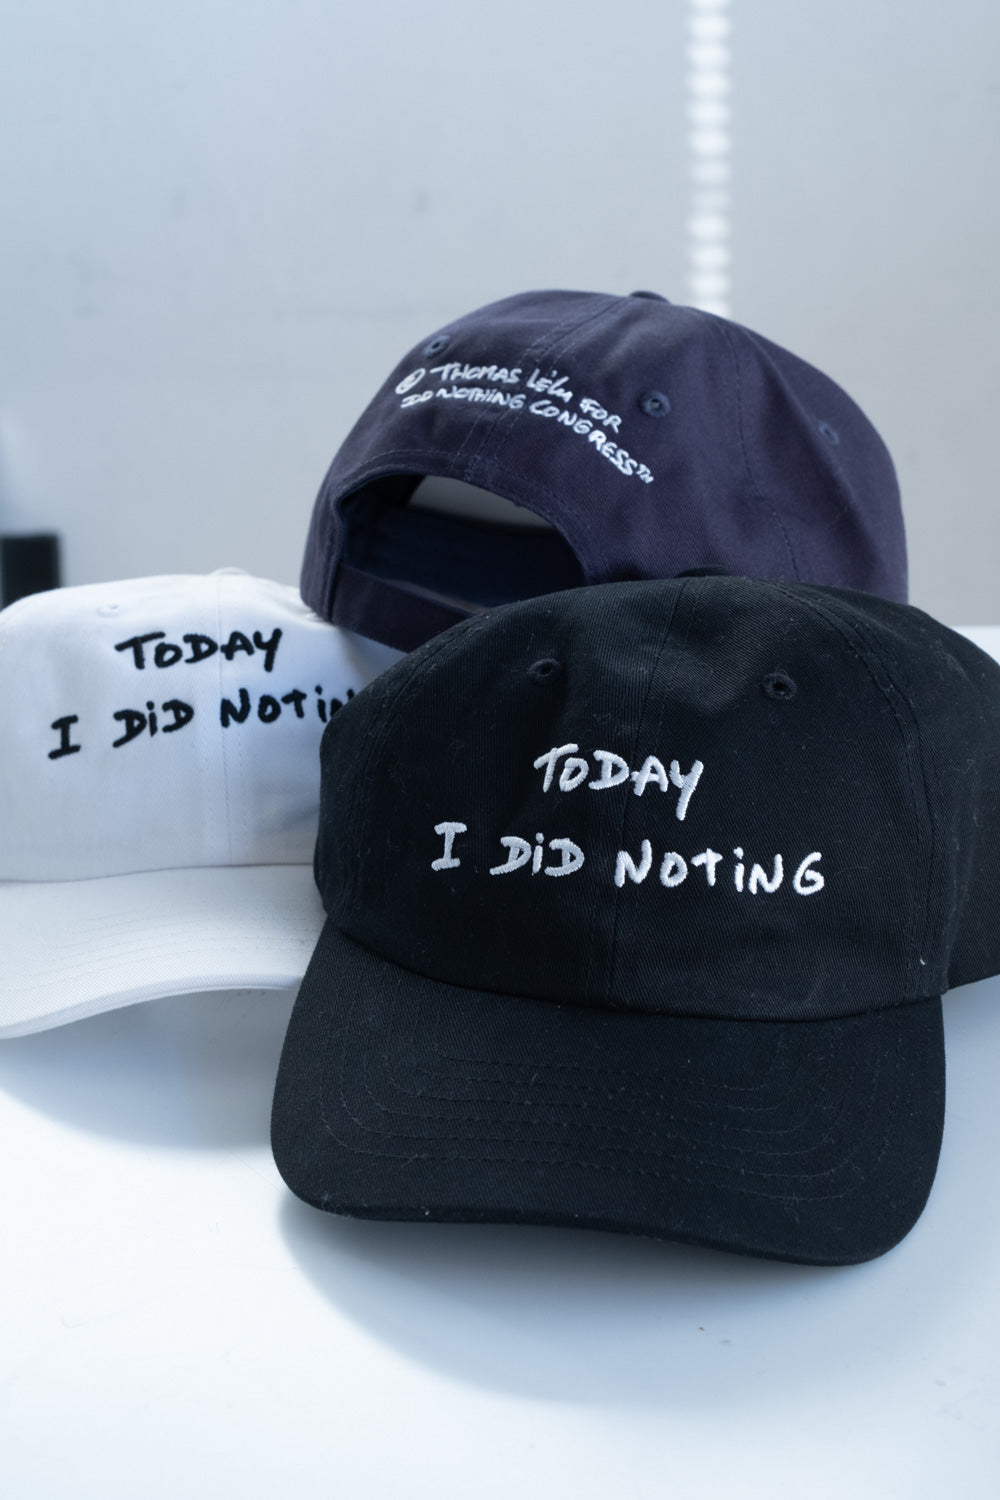 CAP : TODAY I DID NOTING